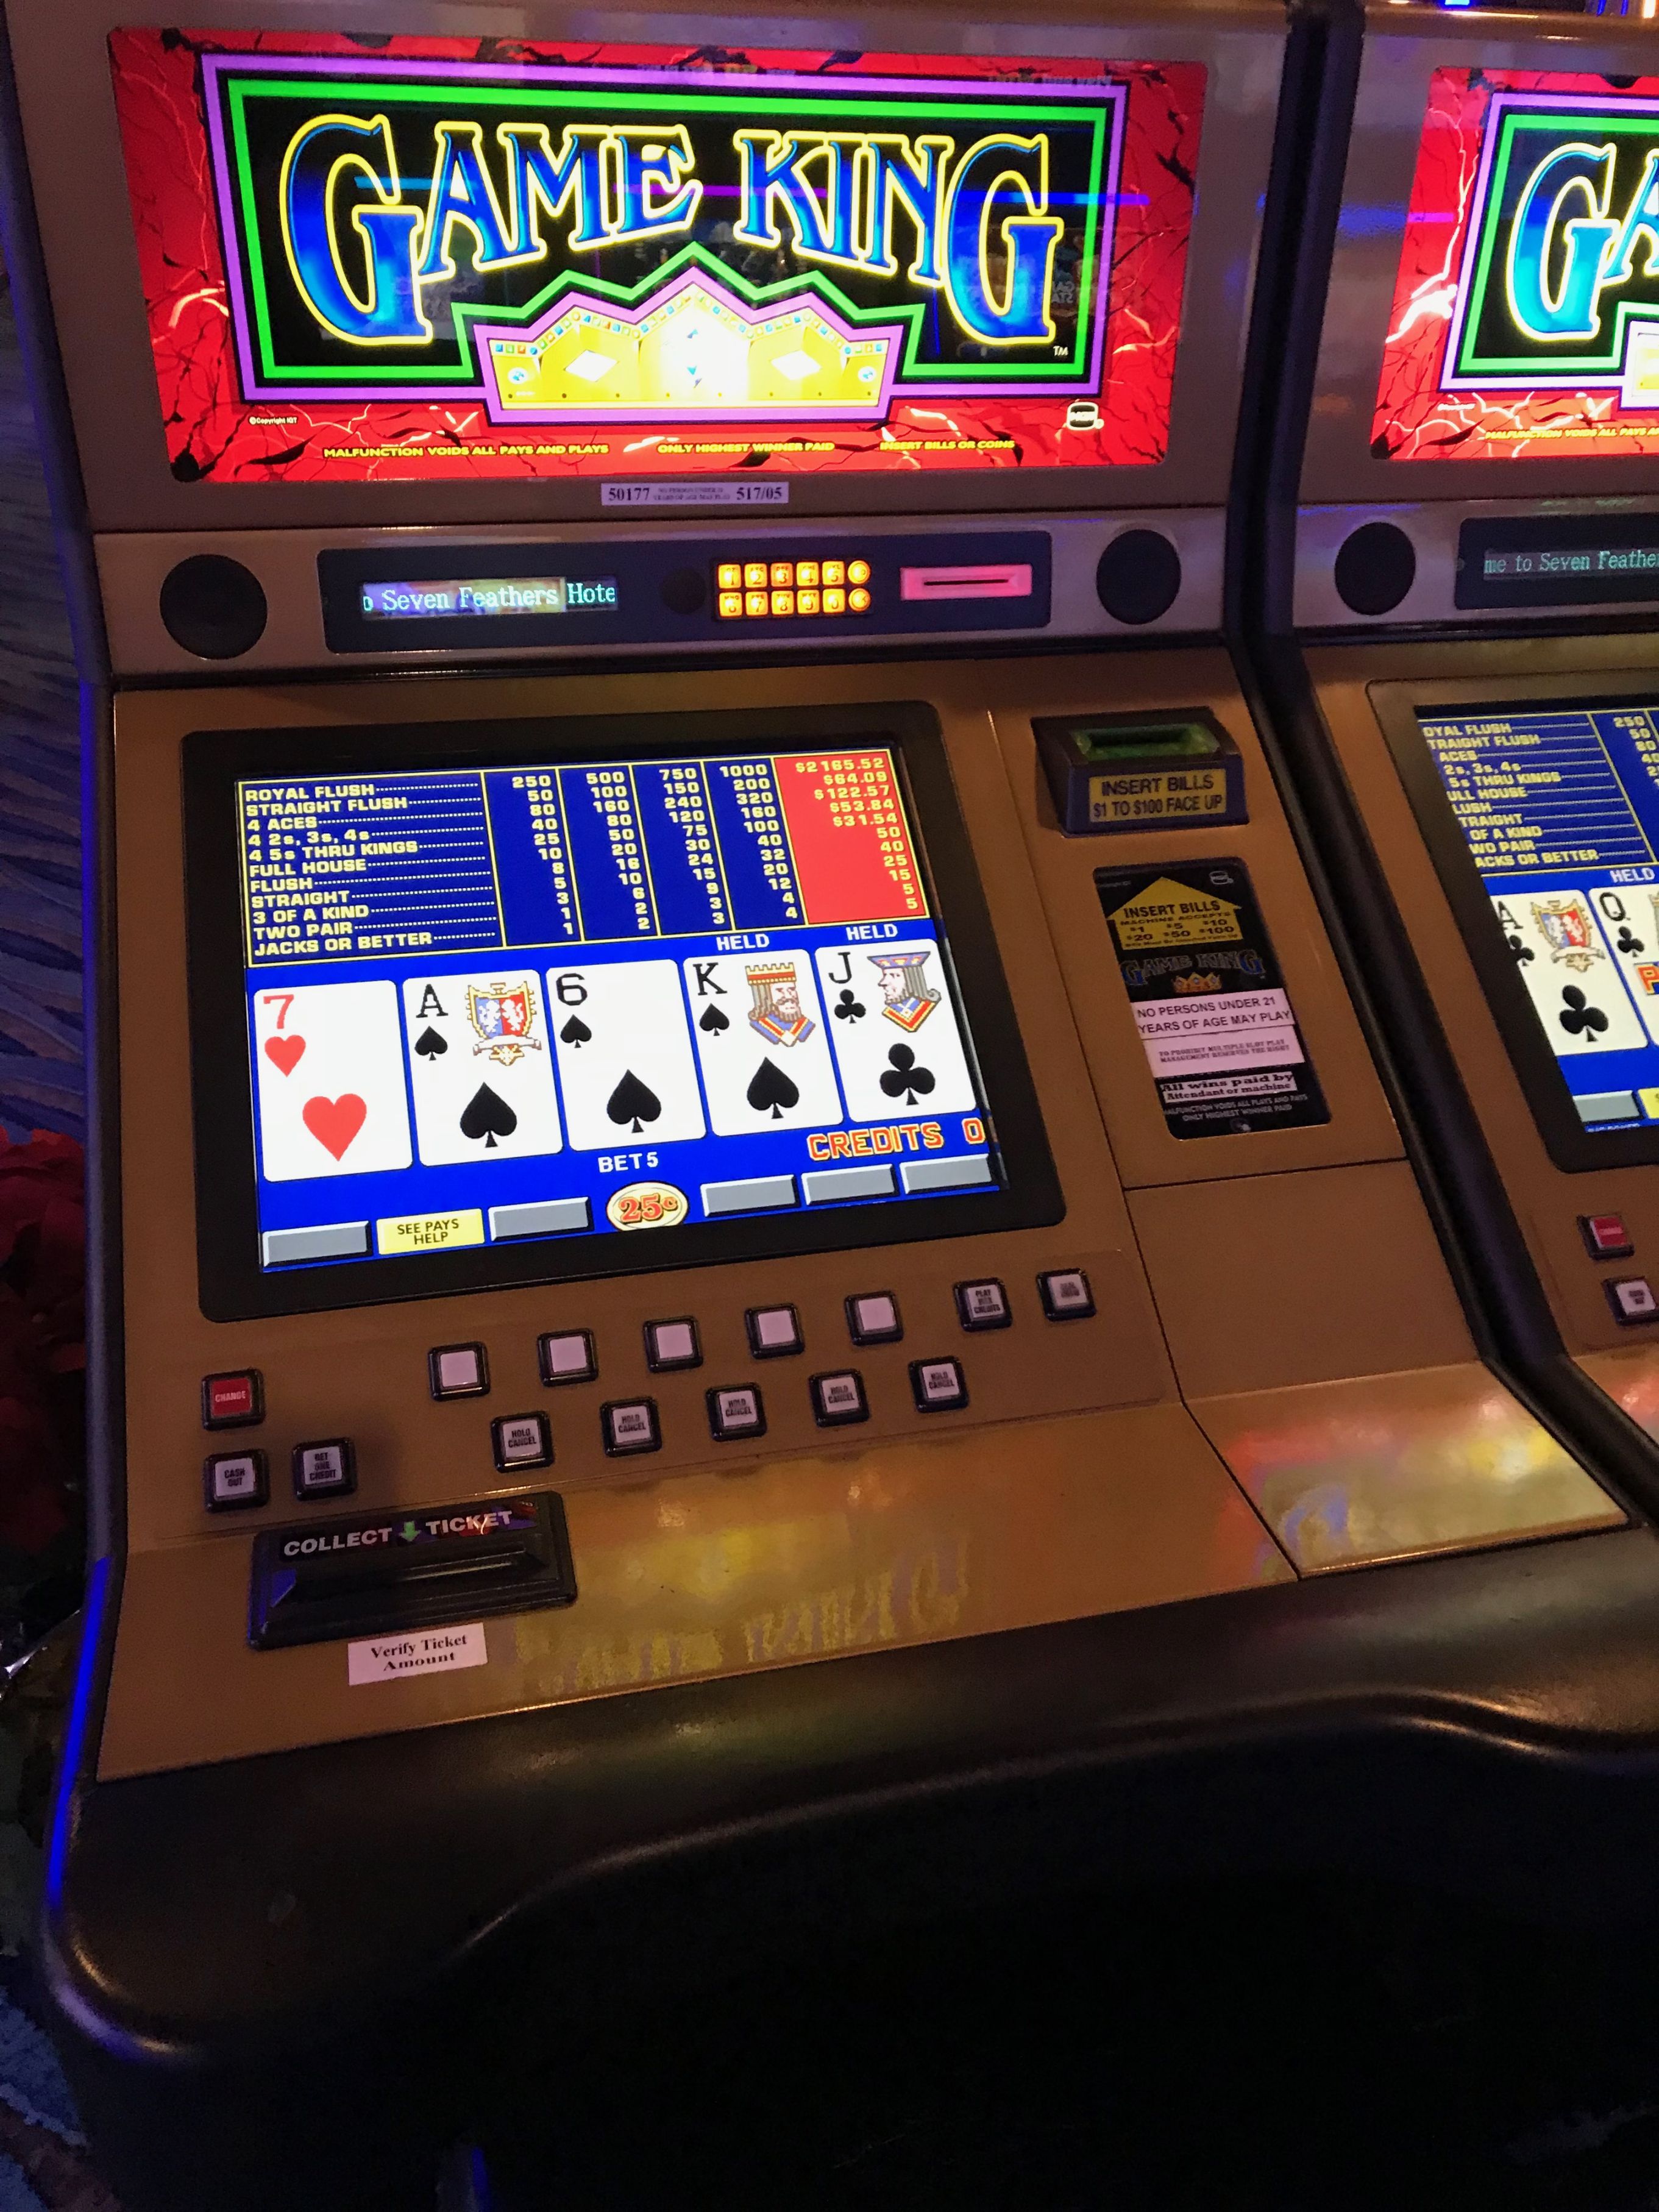 Video poker machines in bars